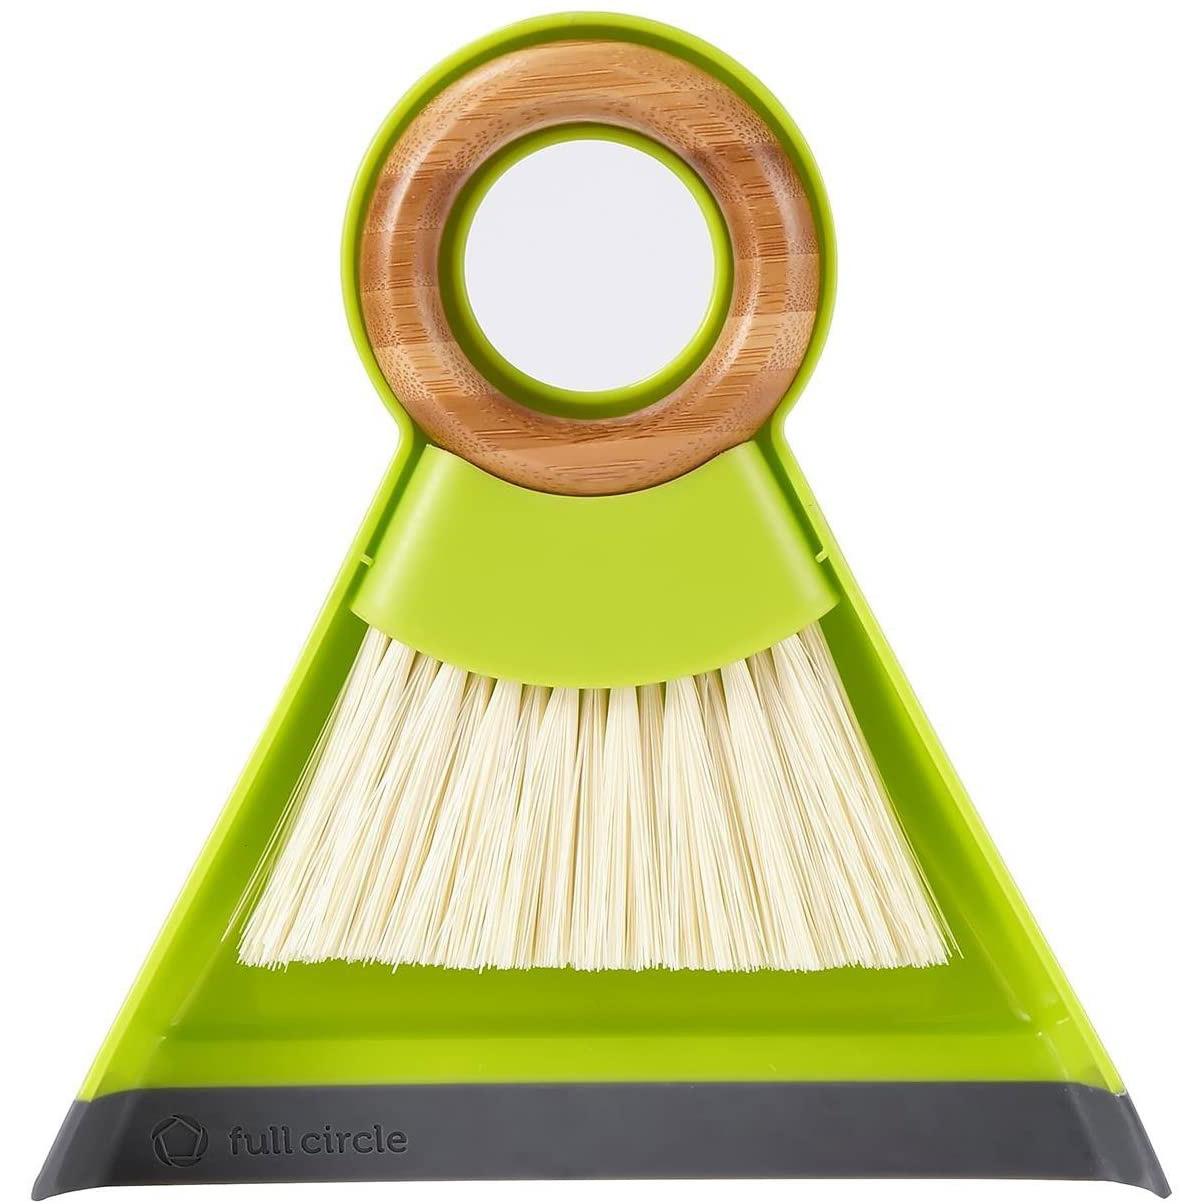 Full Circle Tiny Team Home Cleaning Mini Brush & Dustpan for $2.69